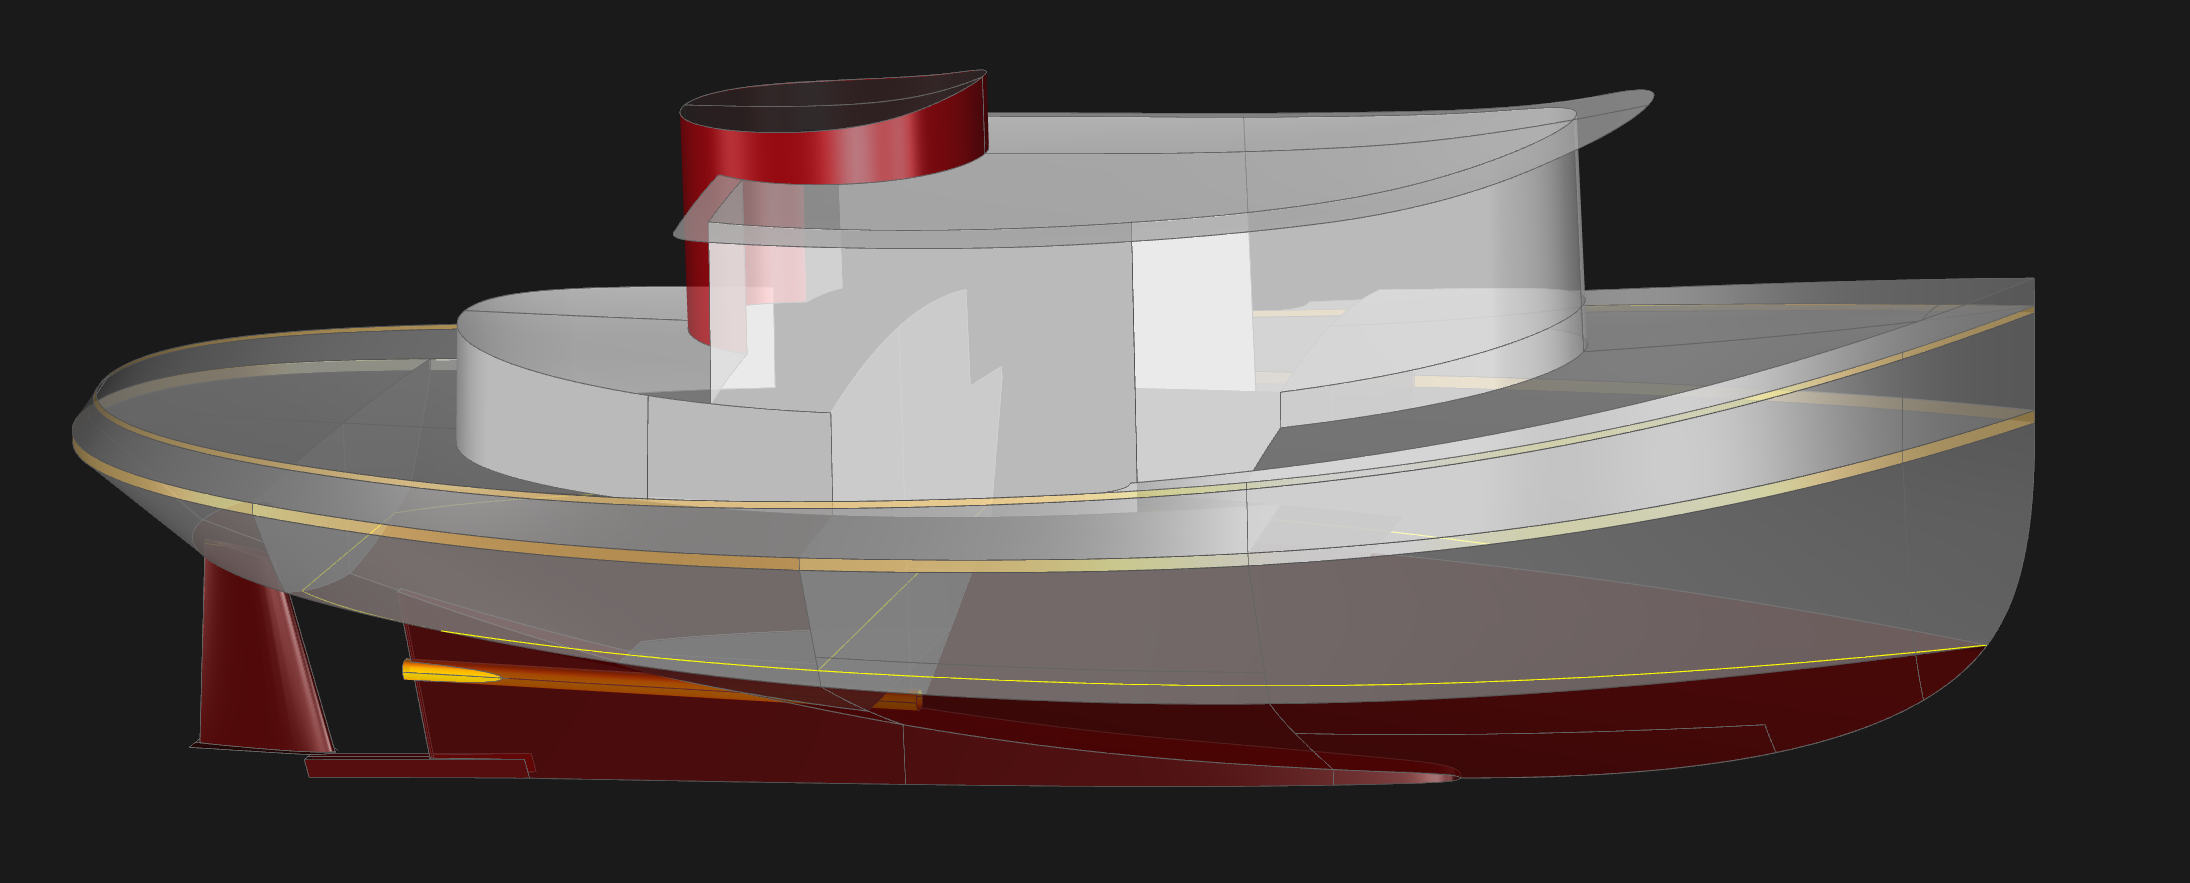 32' Tug Yacht TALISKER - Kasten Marine Design, Inc.